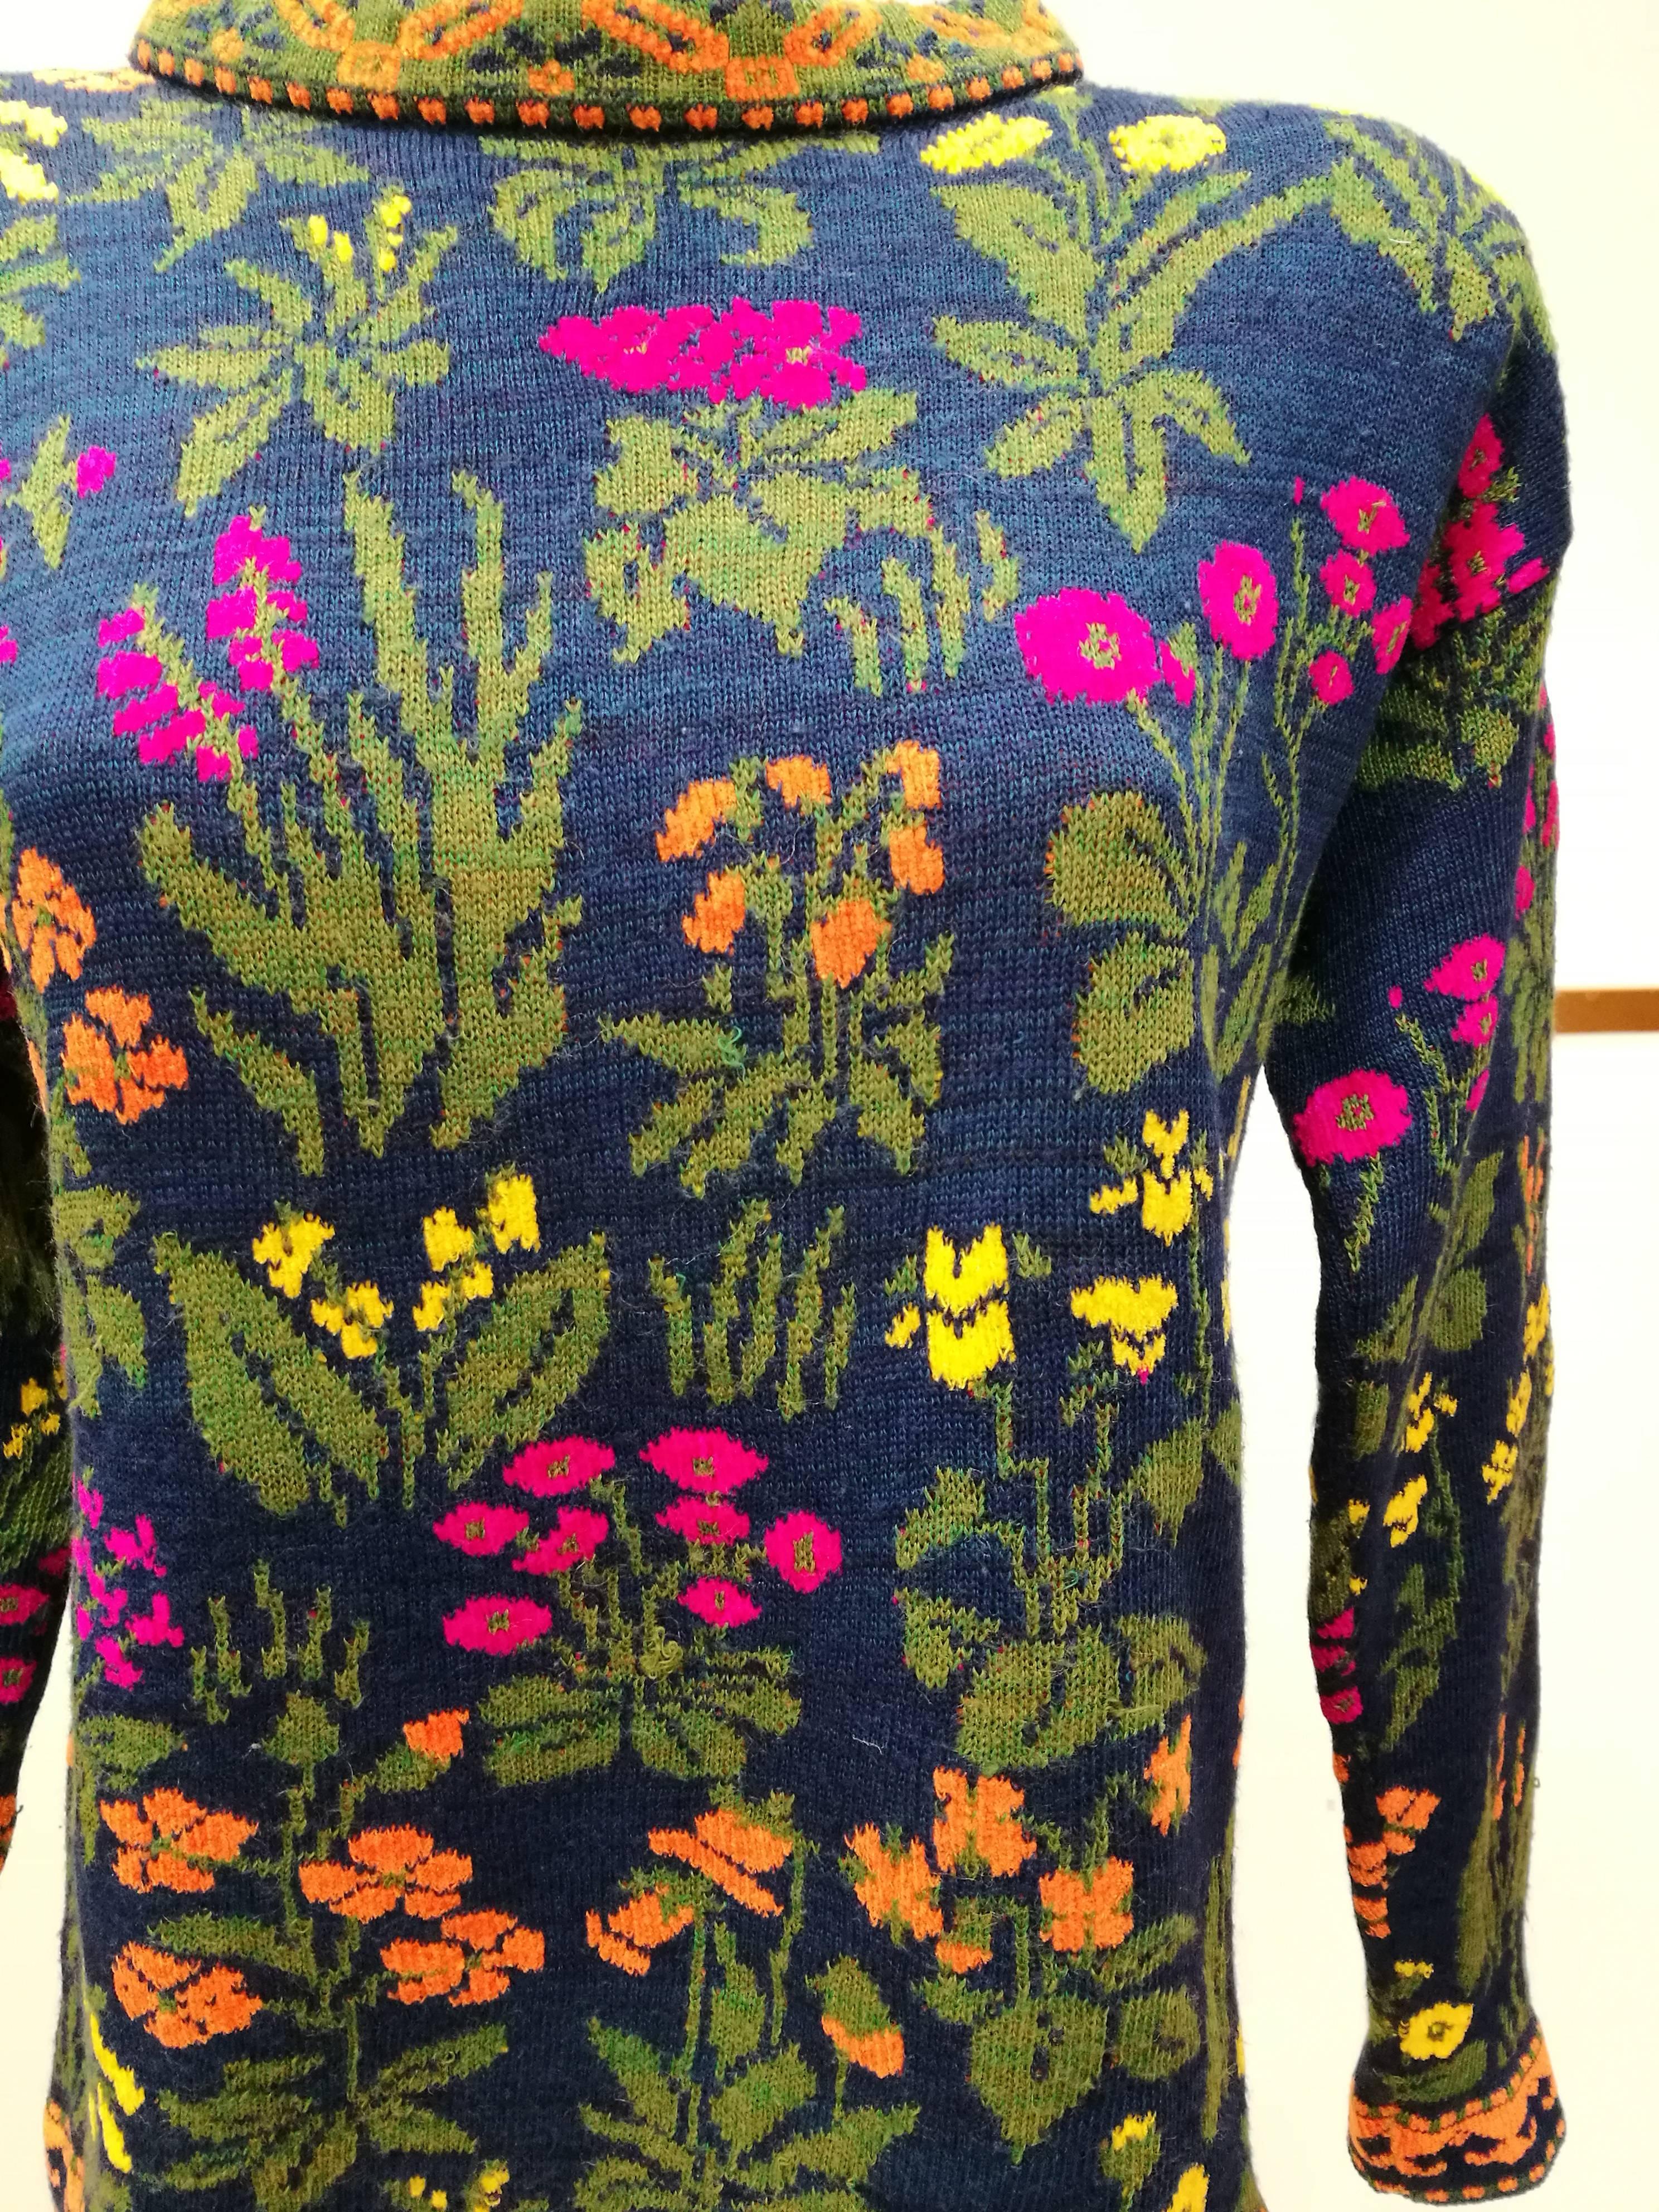 Kenzo Jungle multicolour Flower Sweater

Size L 

